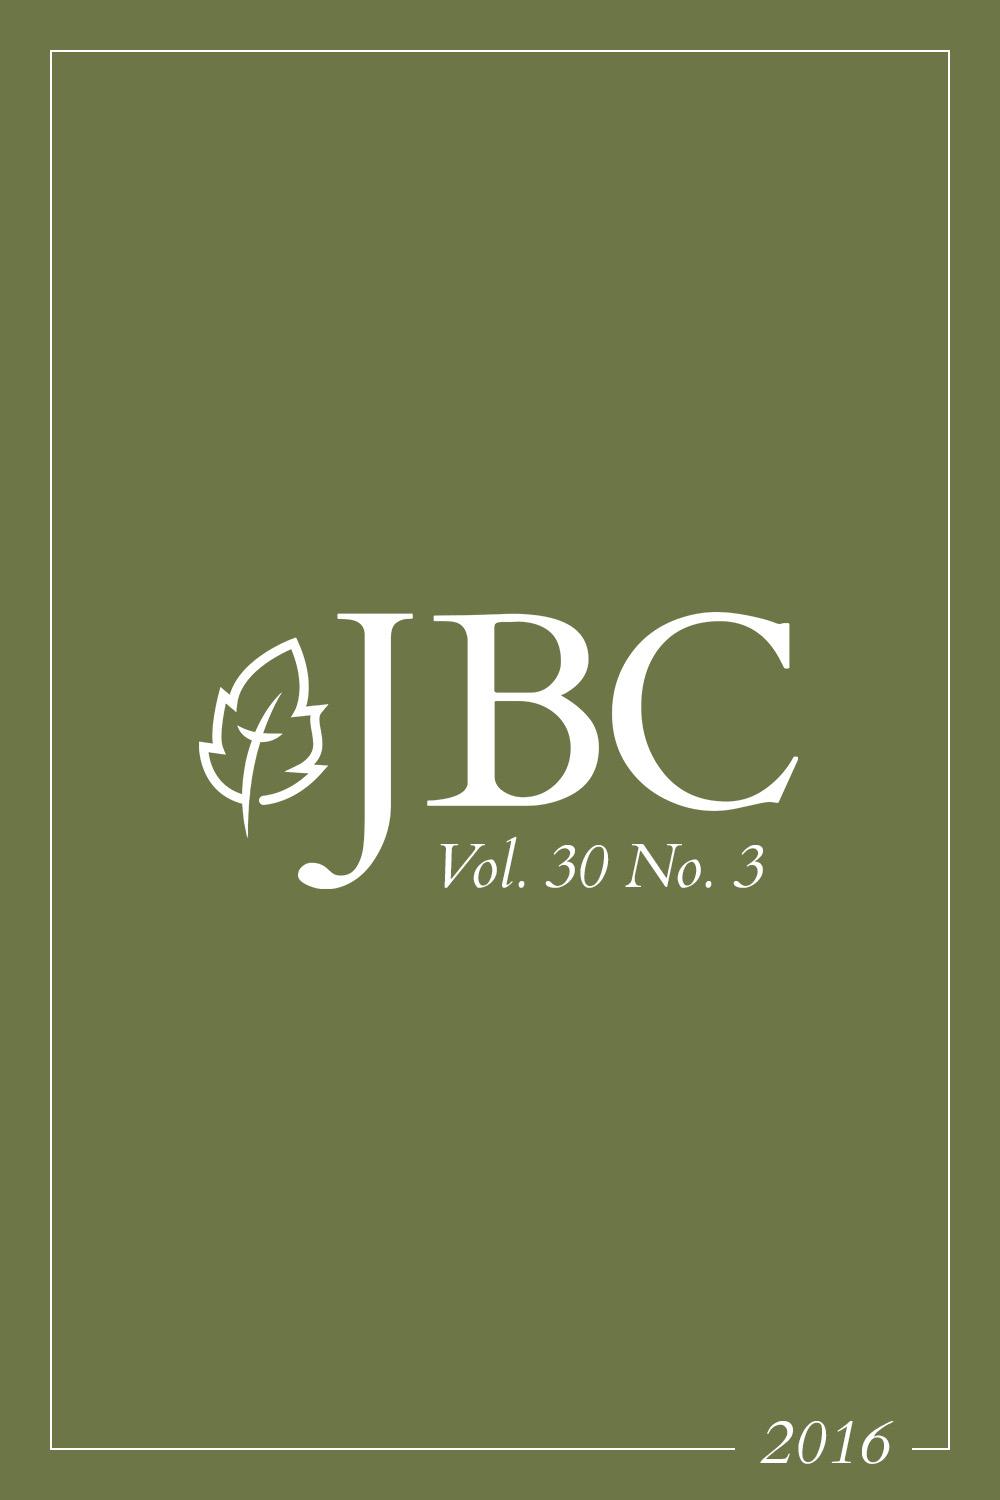 JBC Volume 30:3 (2016) PDF Featured Image